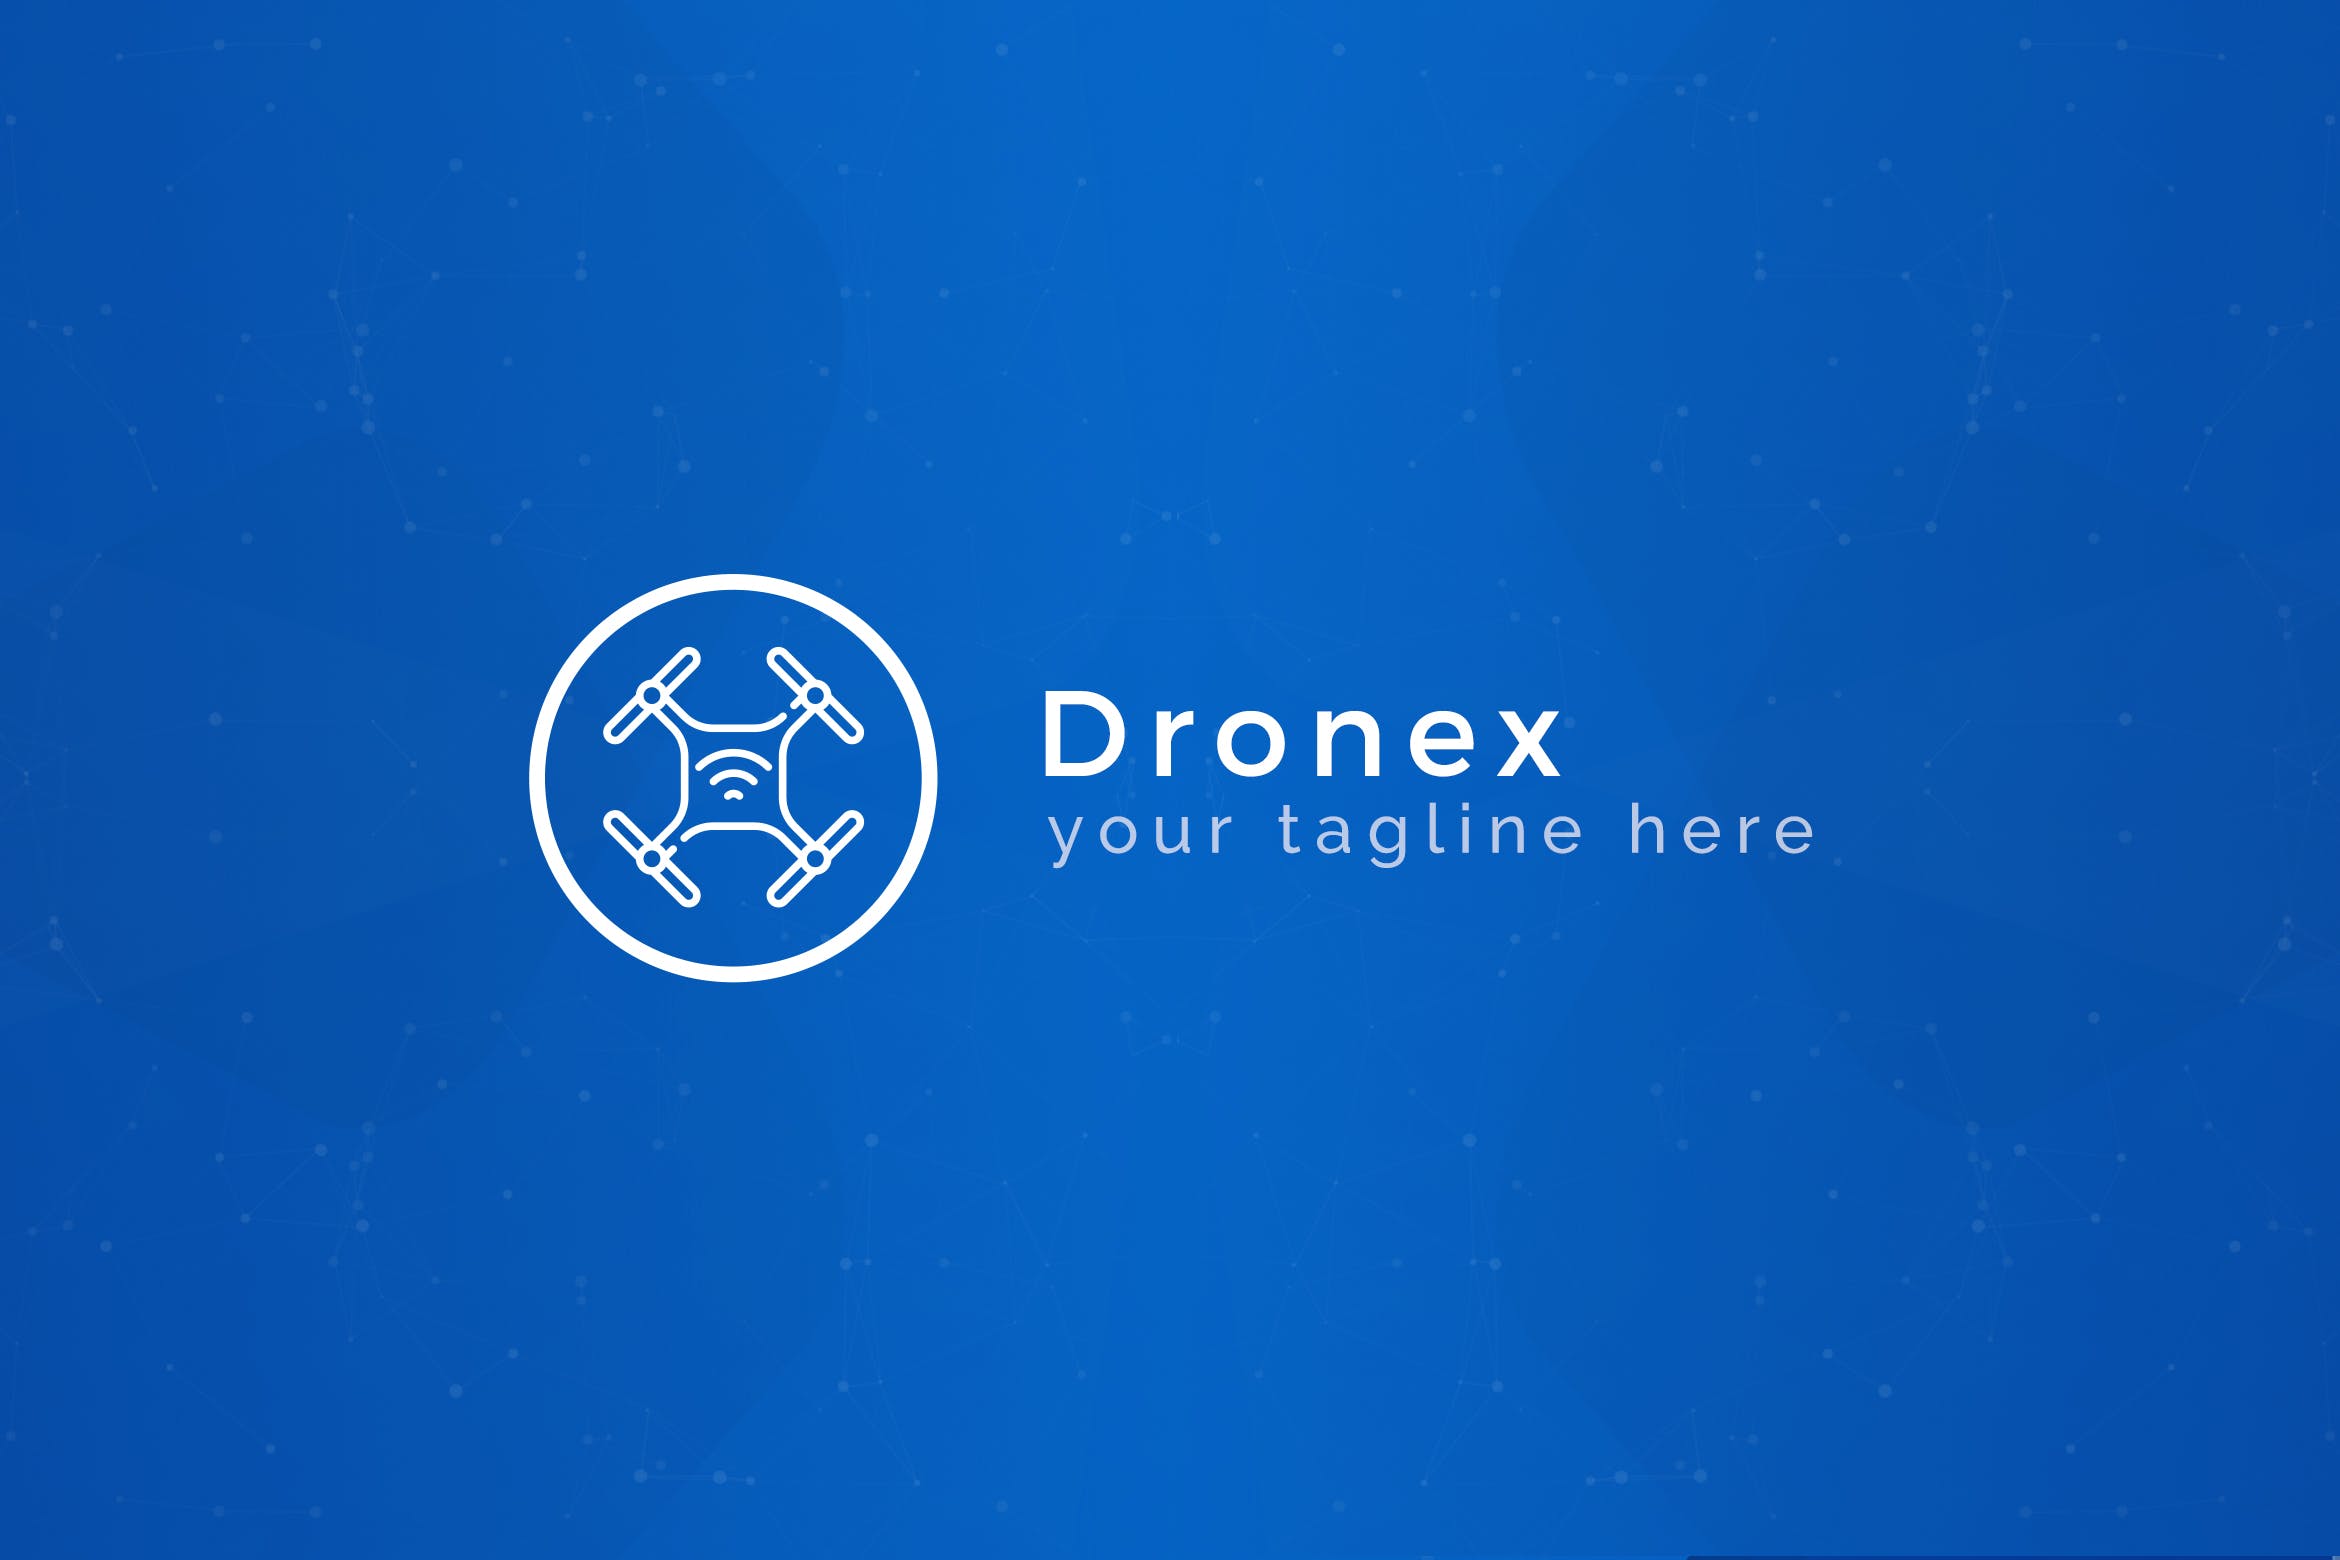 无人机品牌Logo设计16图库精选模板 Dronex – Premium Drone Logo Template插图